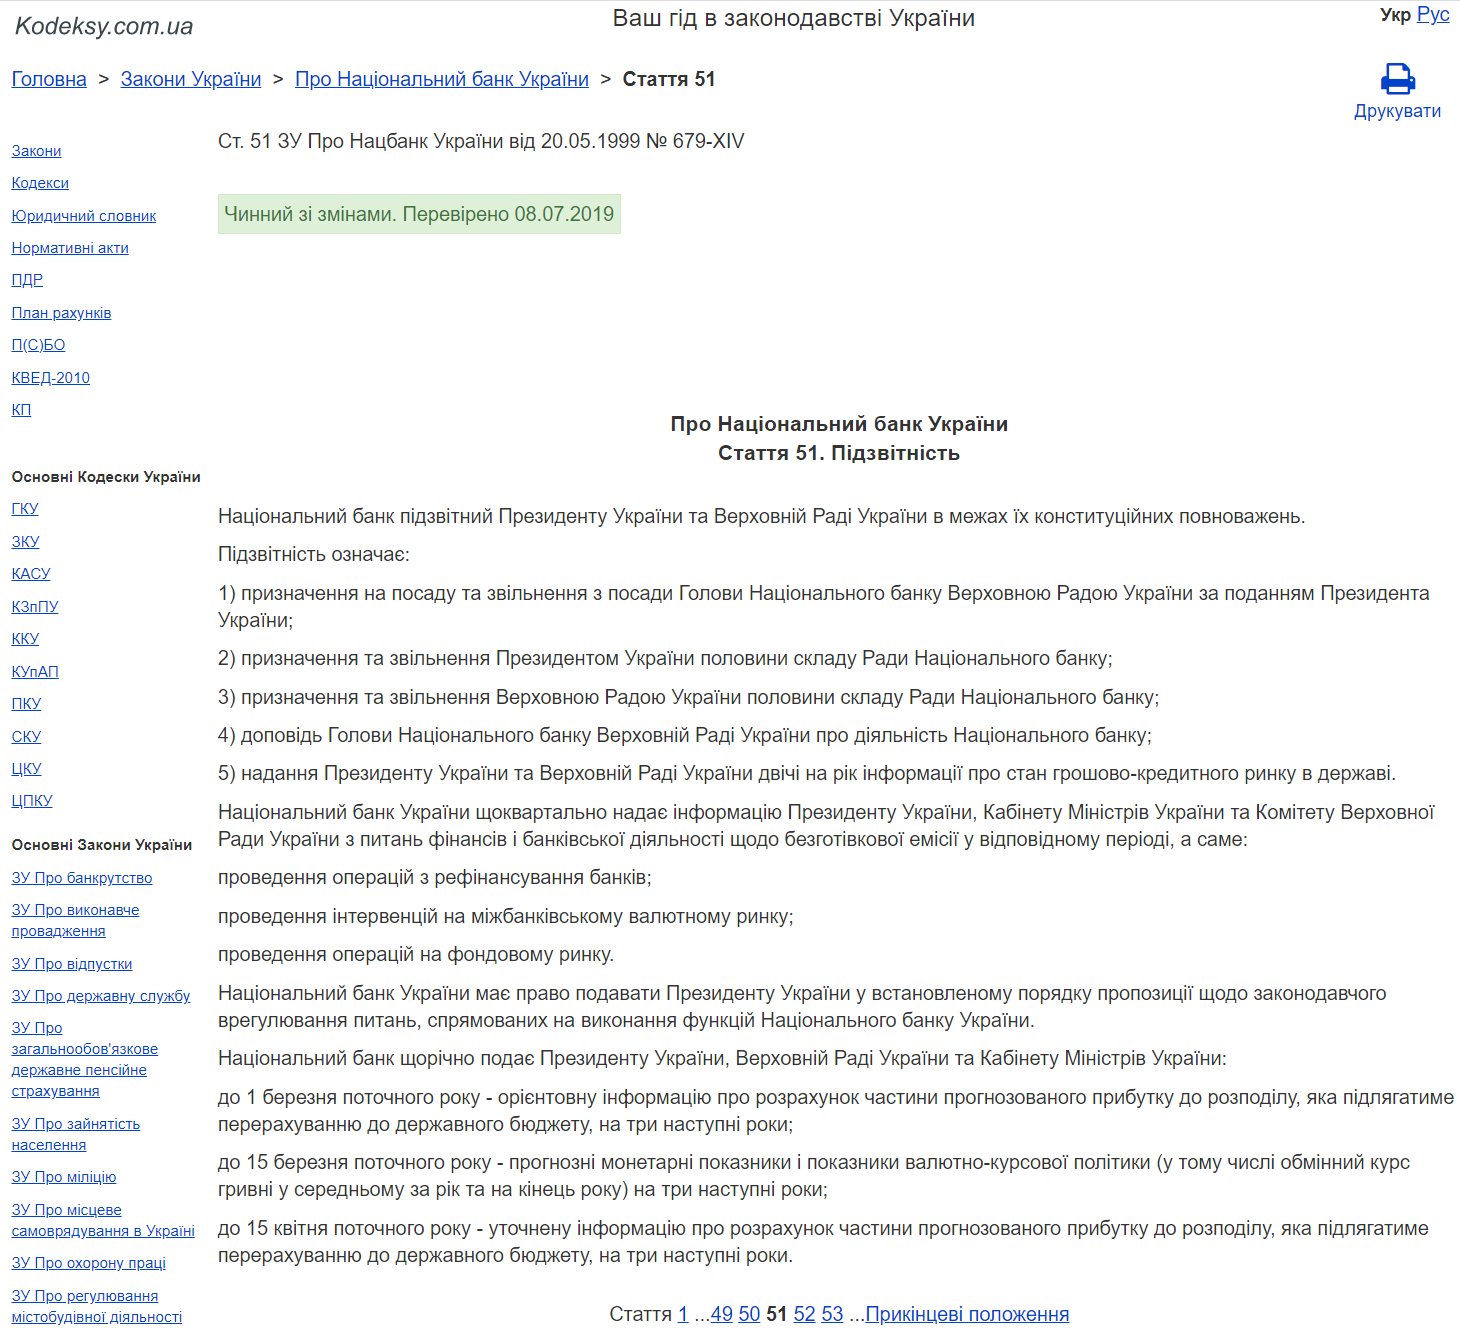 https://kodeksy.com.ua/pro_natsional_nij_bank_ukraini/statja-51.htm